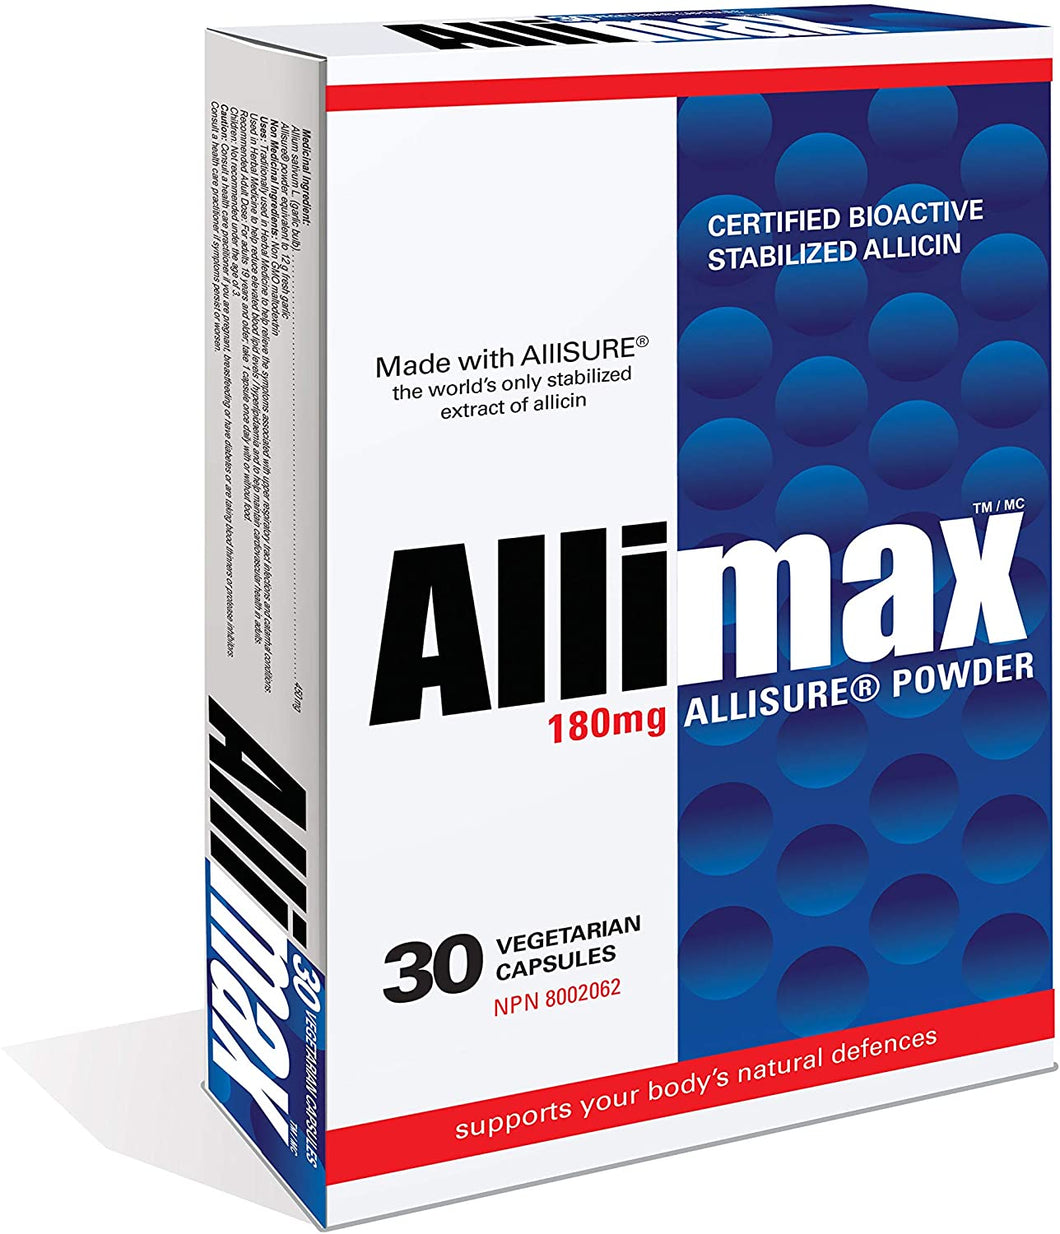 Allimax Stabilized Allicin 180mg Caps